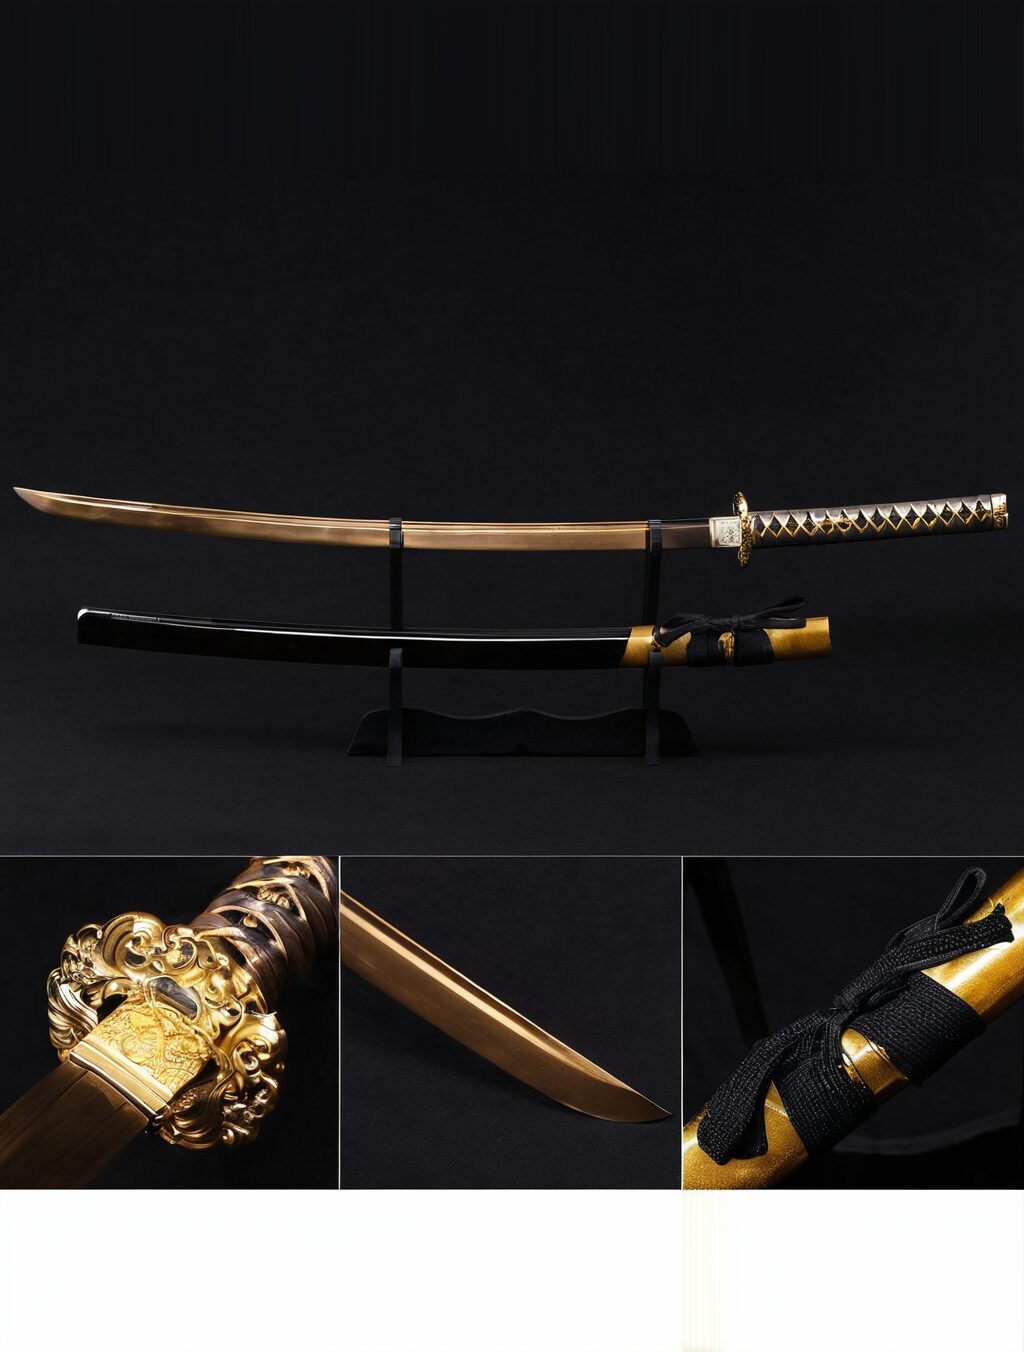 where to buy a samurai sword in japan